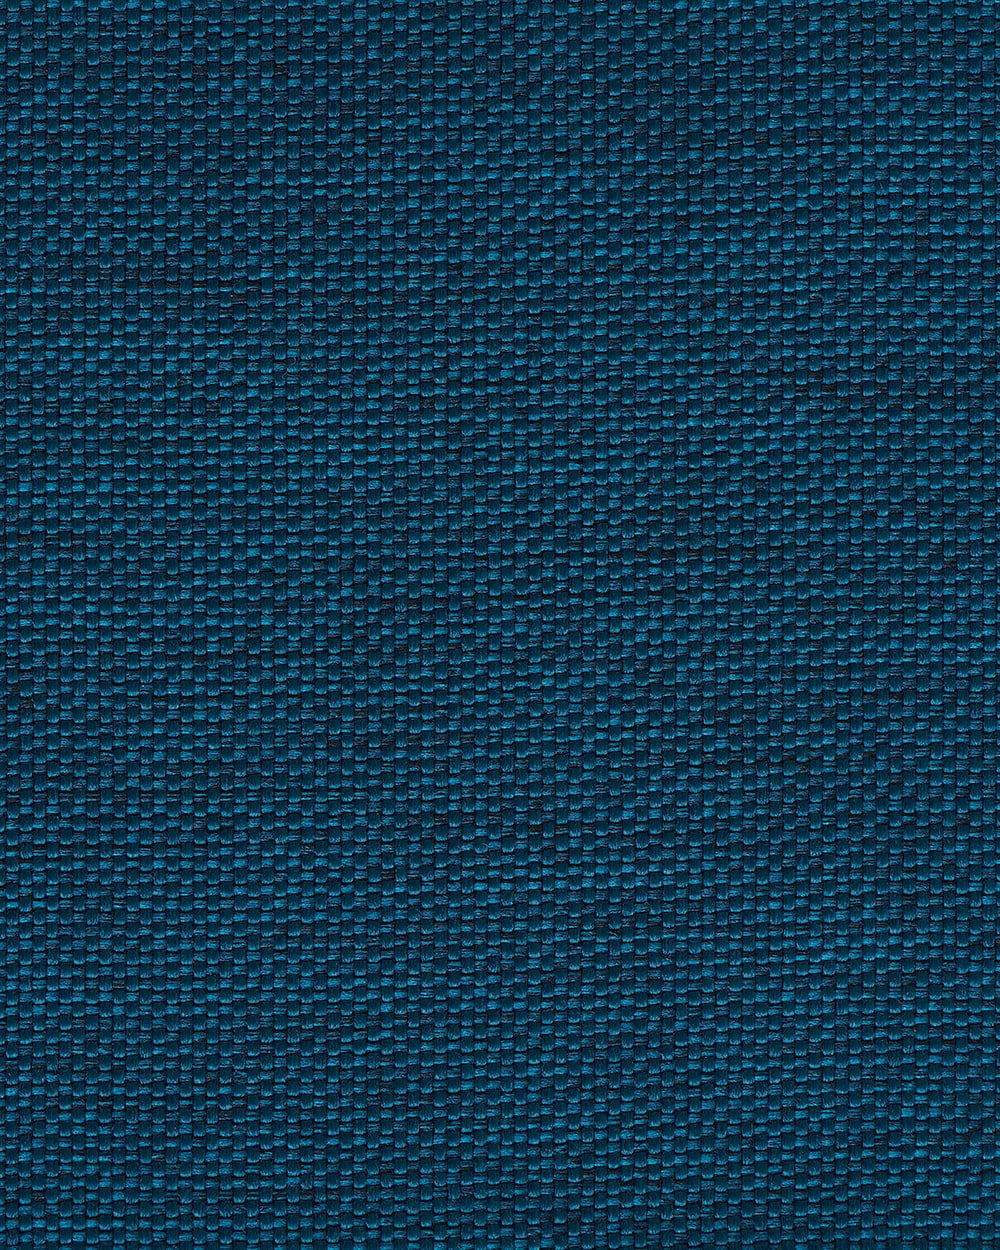 Chumbak Jodhpur Bench - Mediterranian Blue